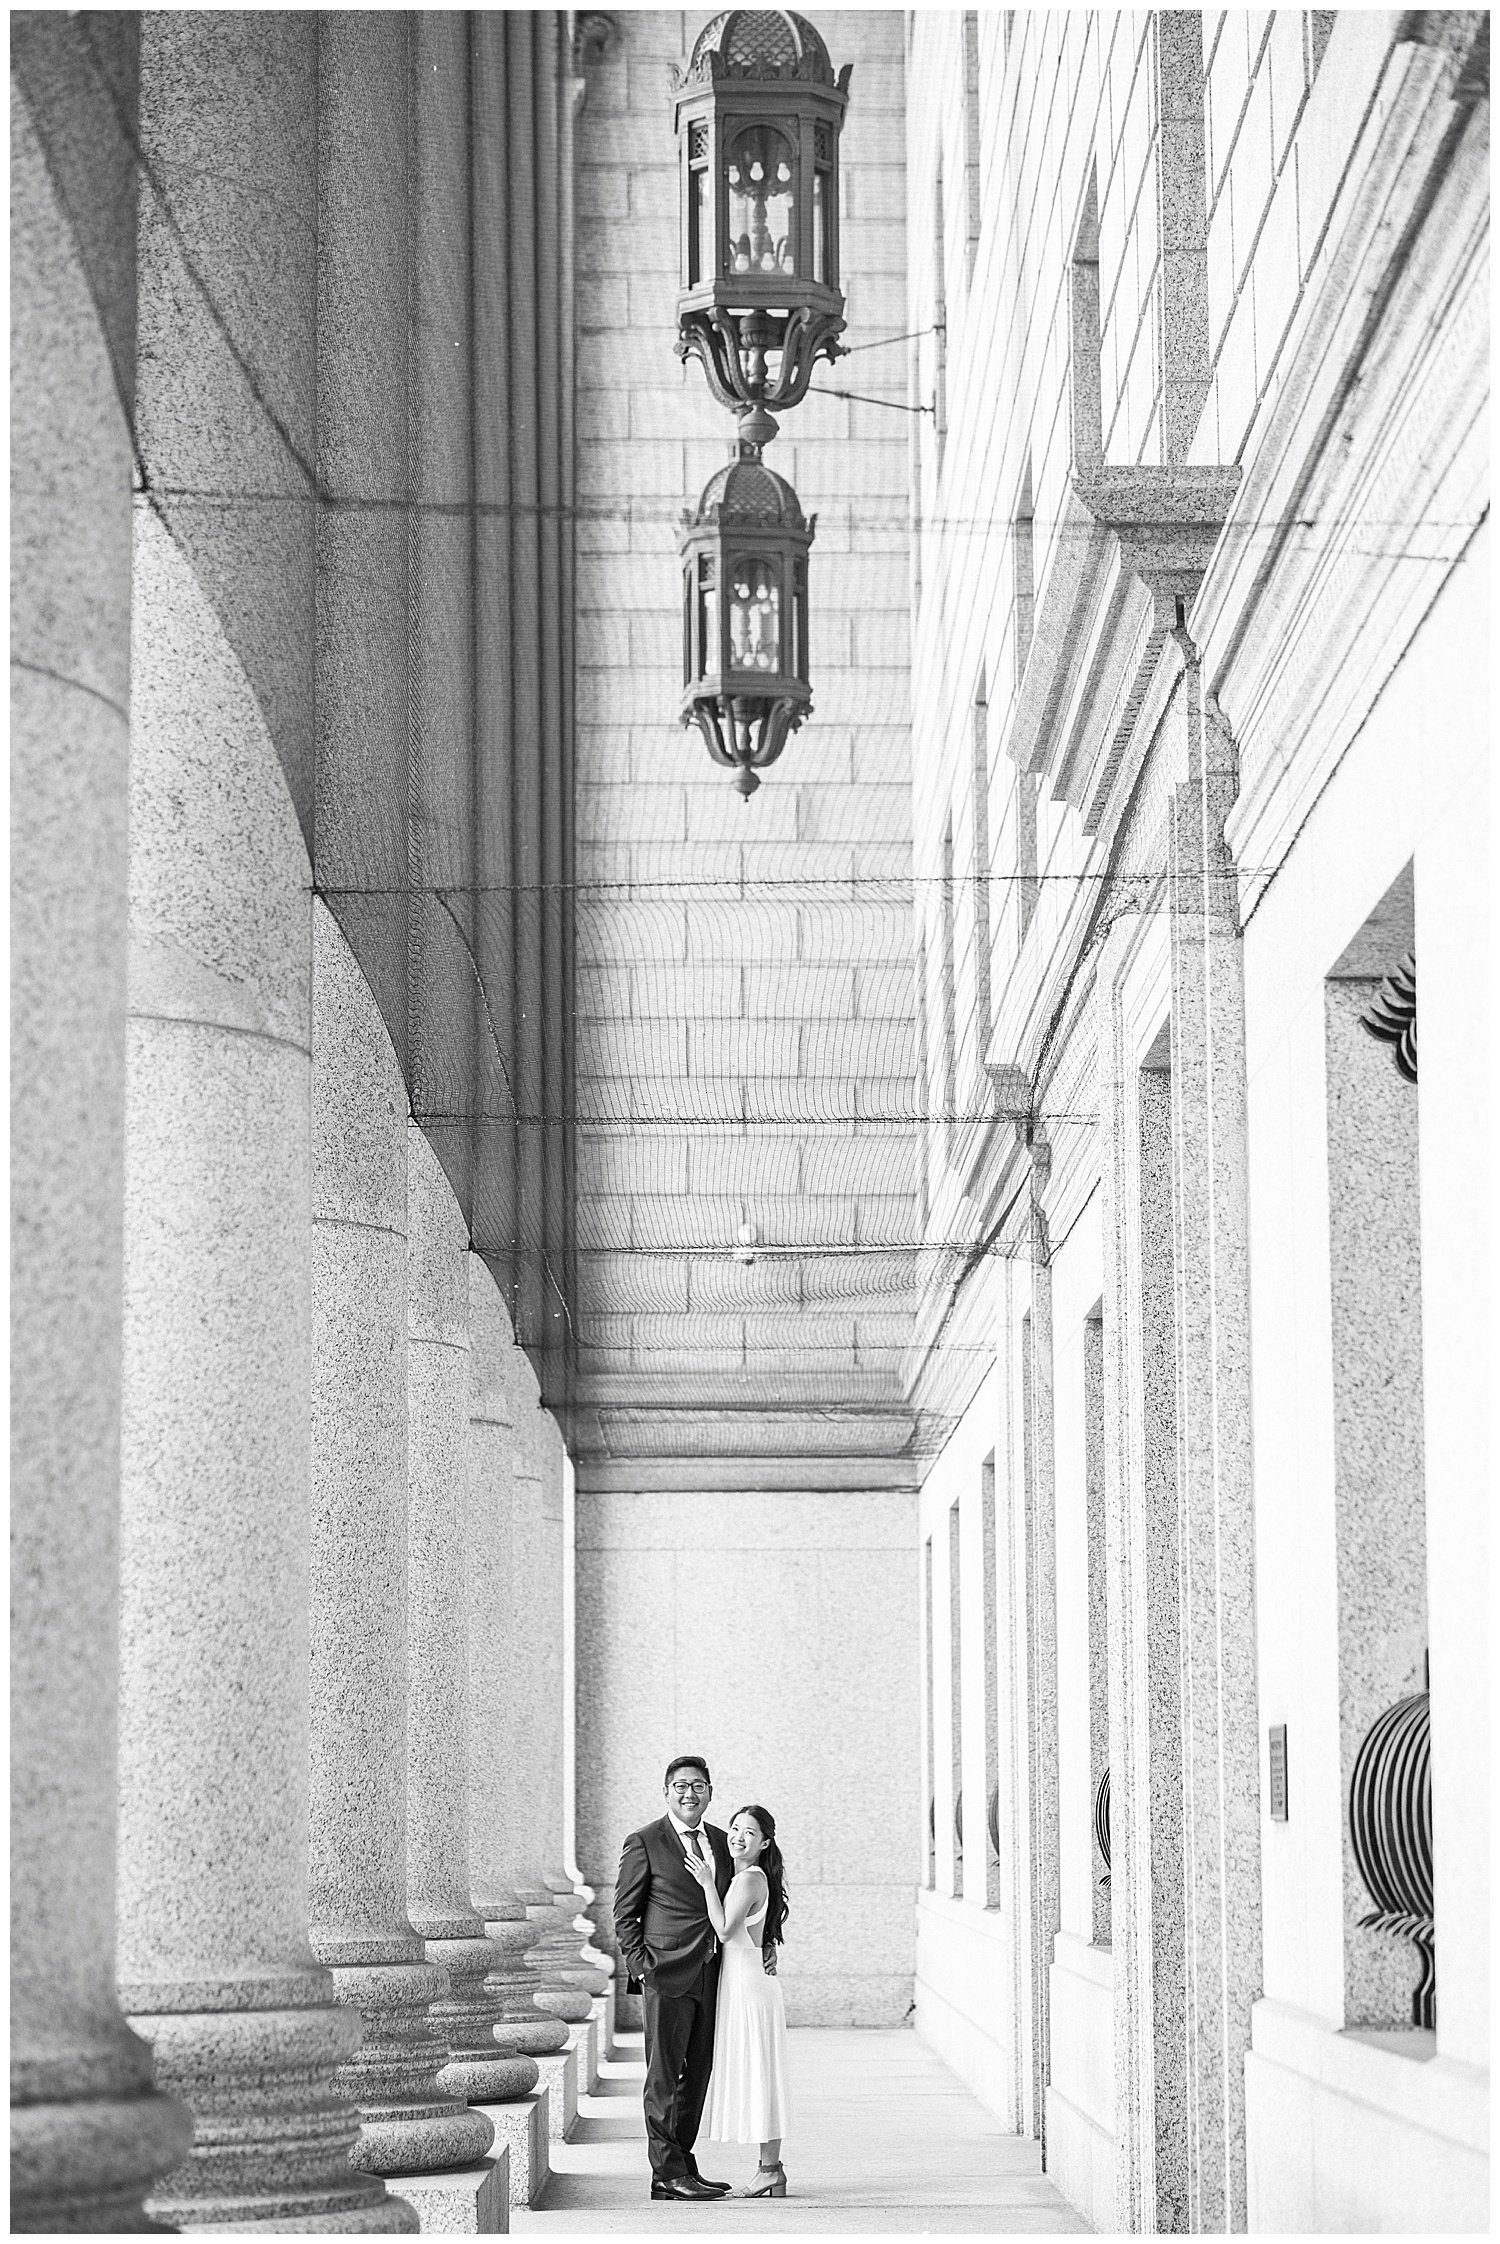 NYC-Marriage-Bureau-Elopement-Wedding-at-City-Hall-Apollo-Fields-13.jpg